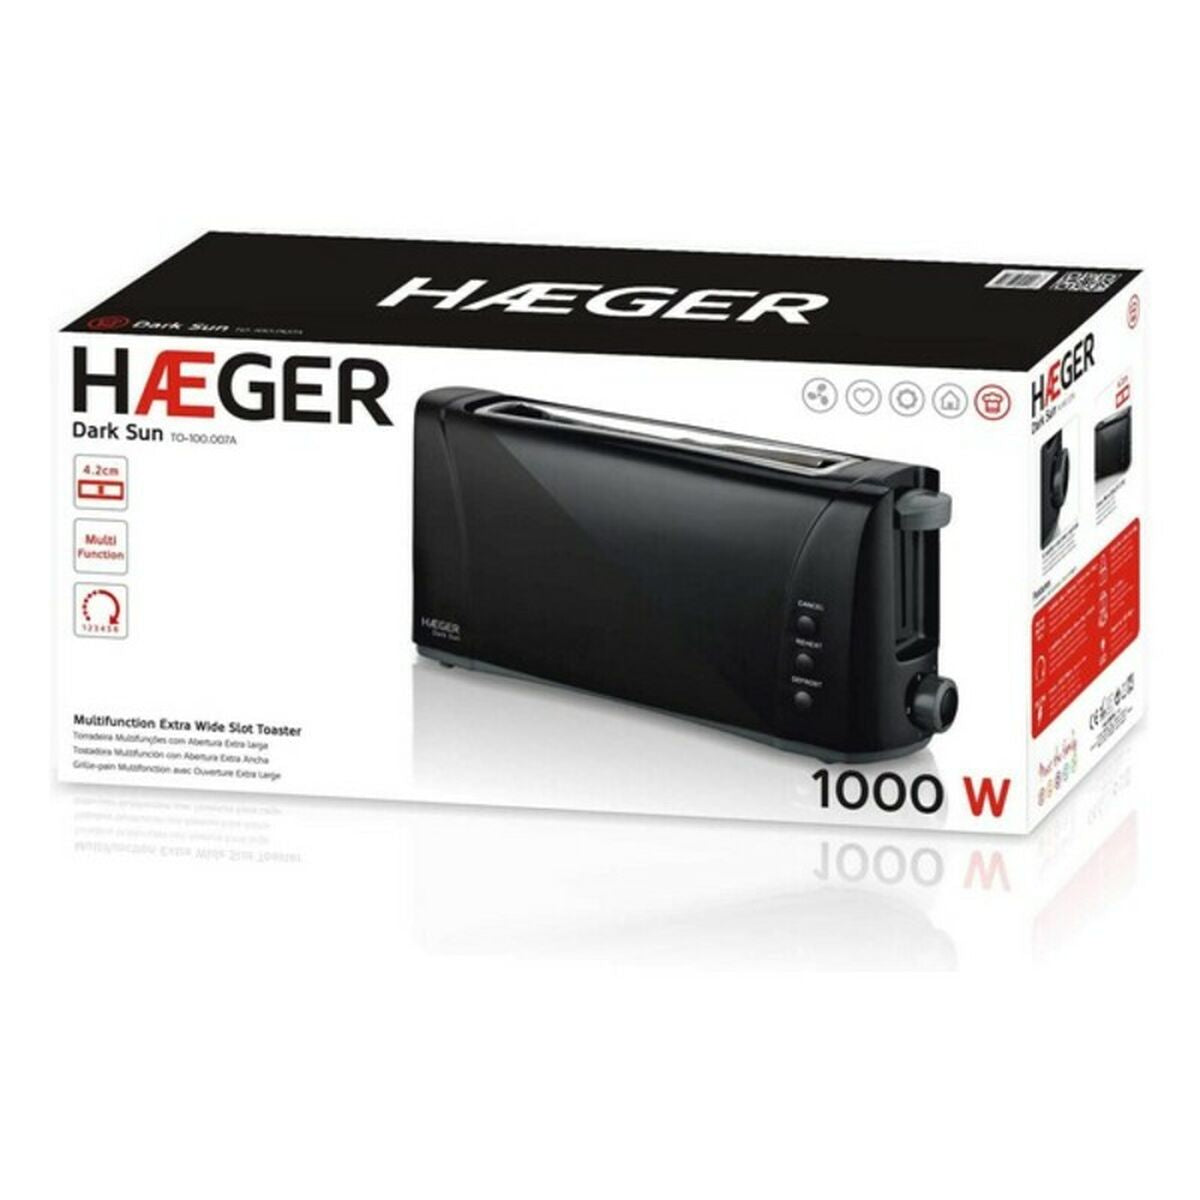 Toaster Haeger 1000 W - CA International 